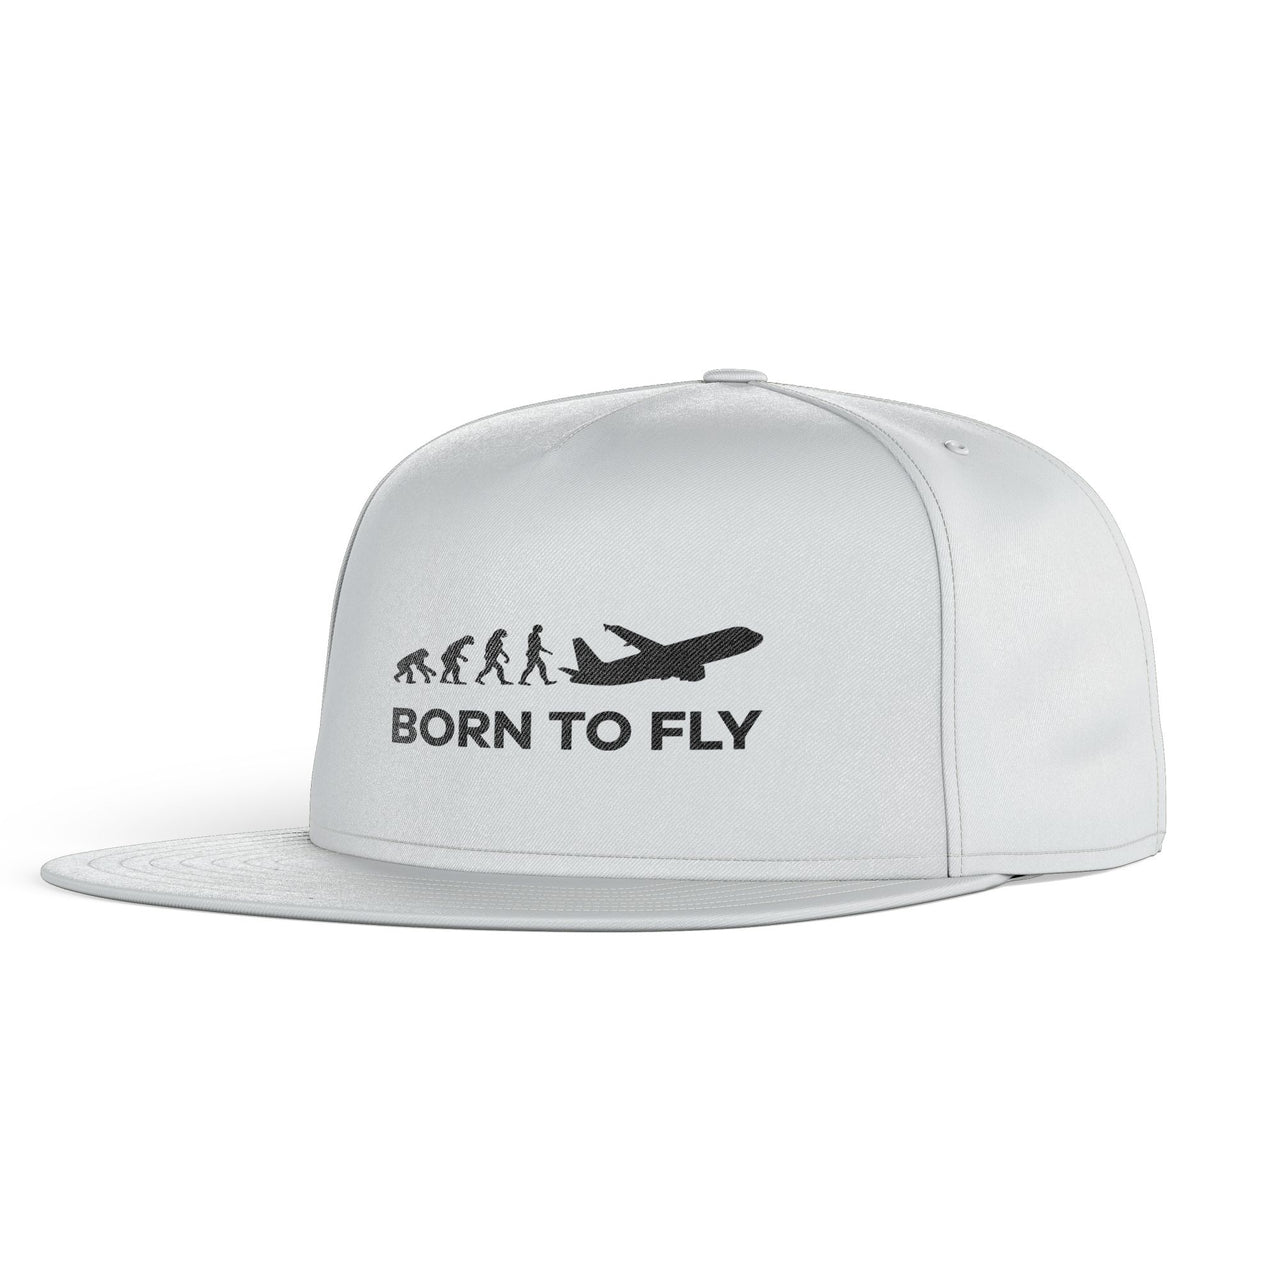 Born To Fly Designed Snapback Caps & Hats